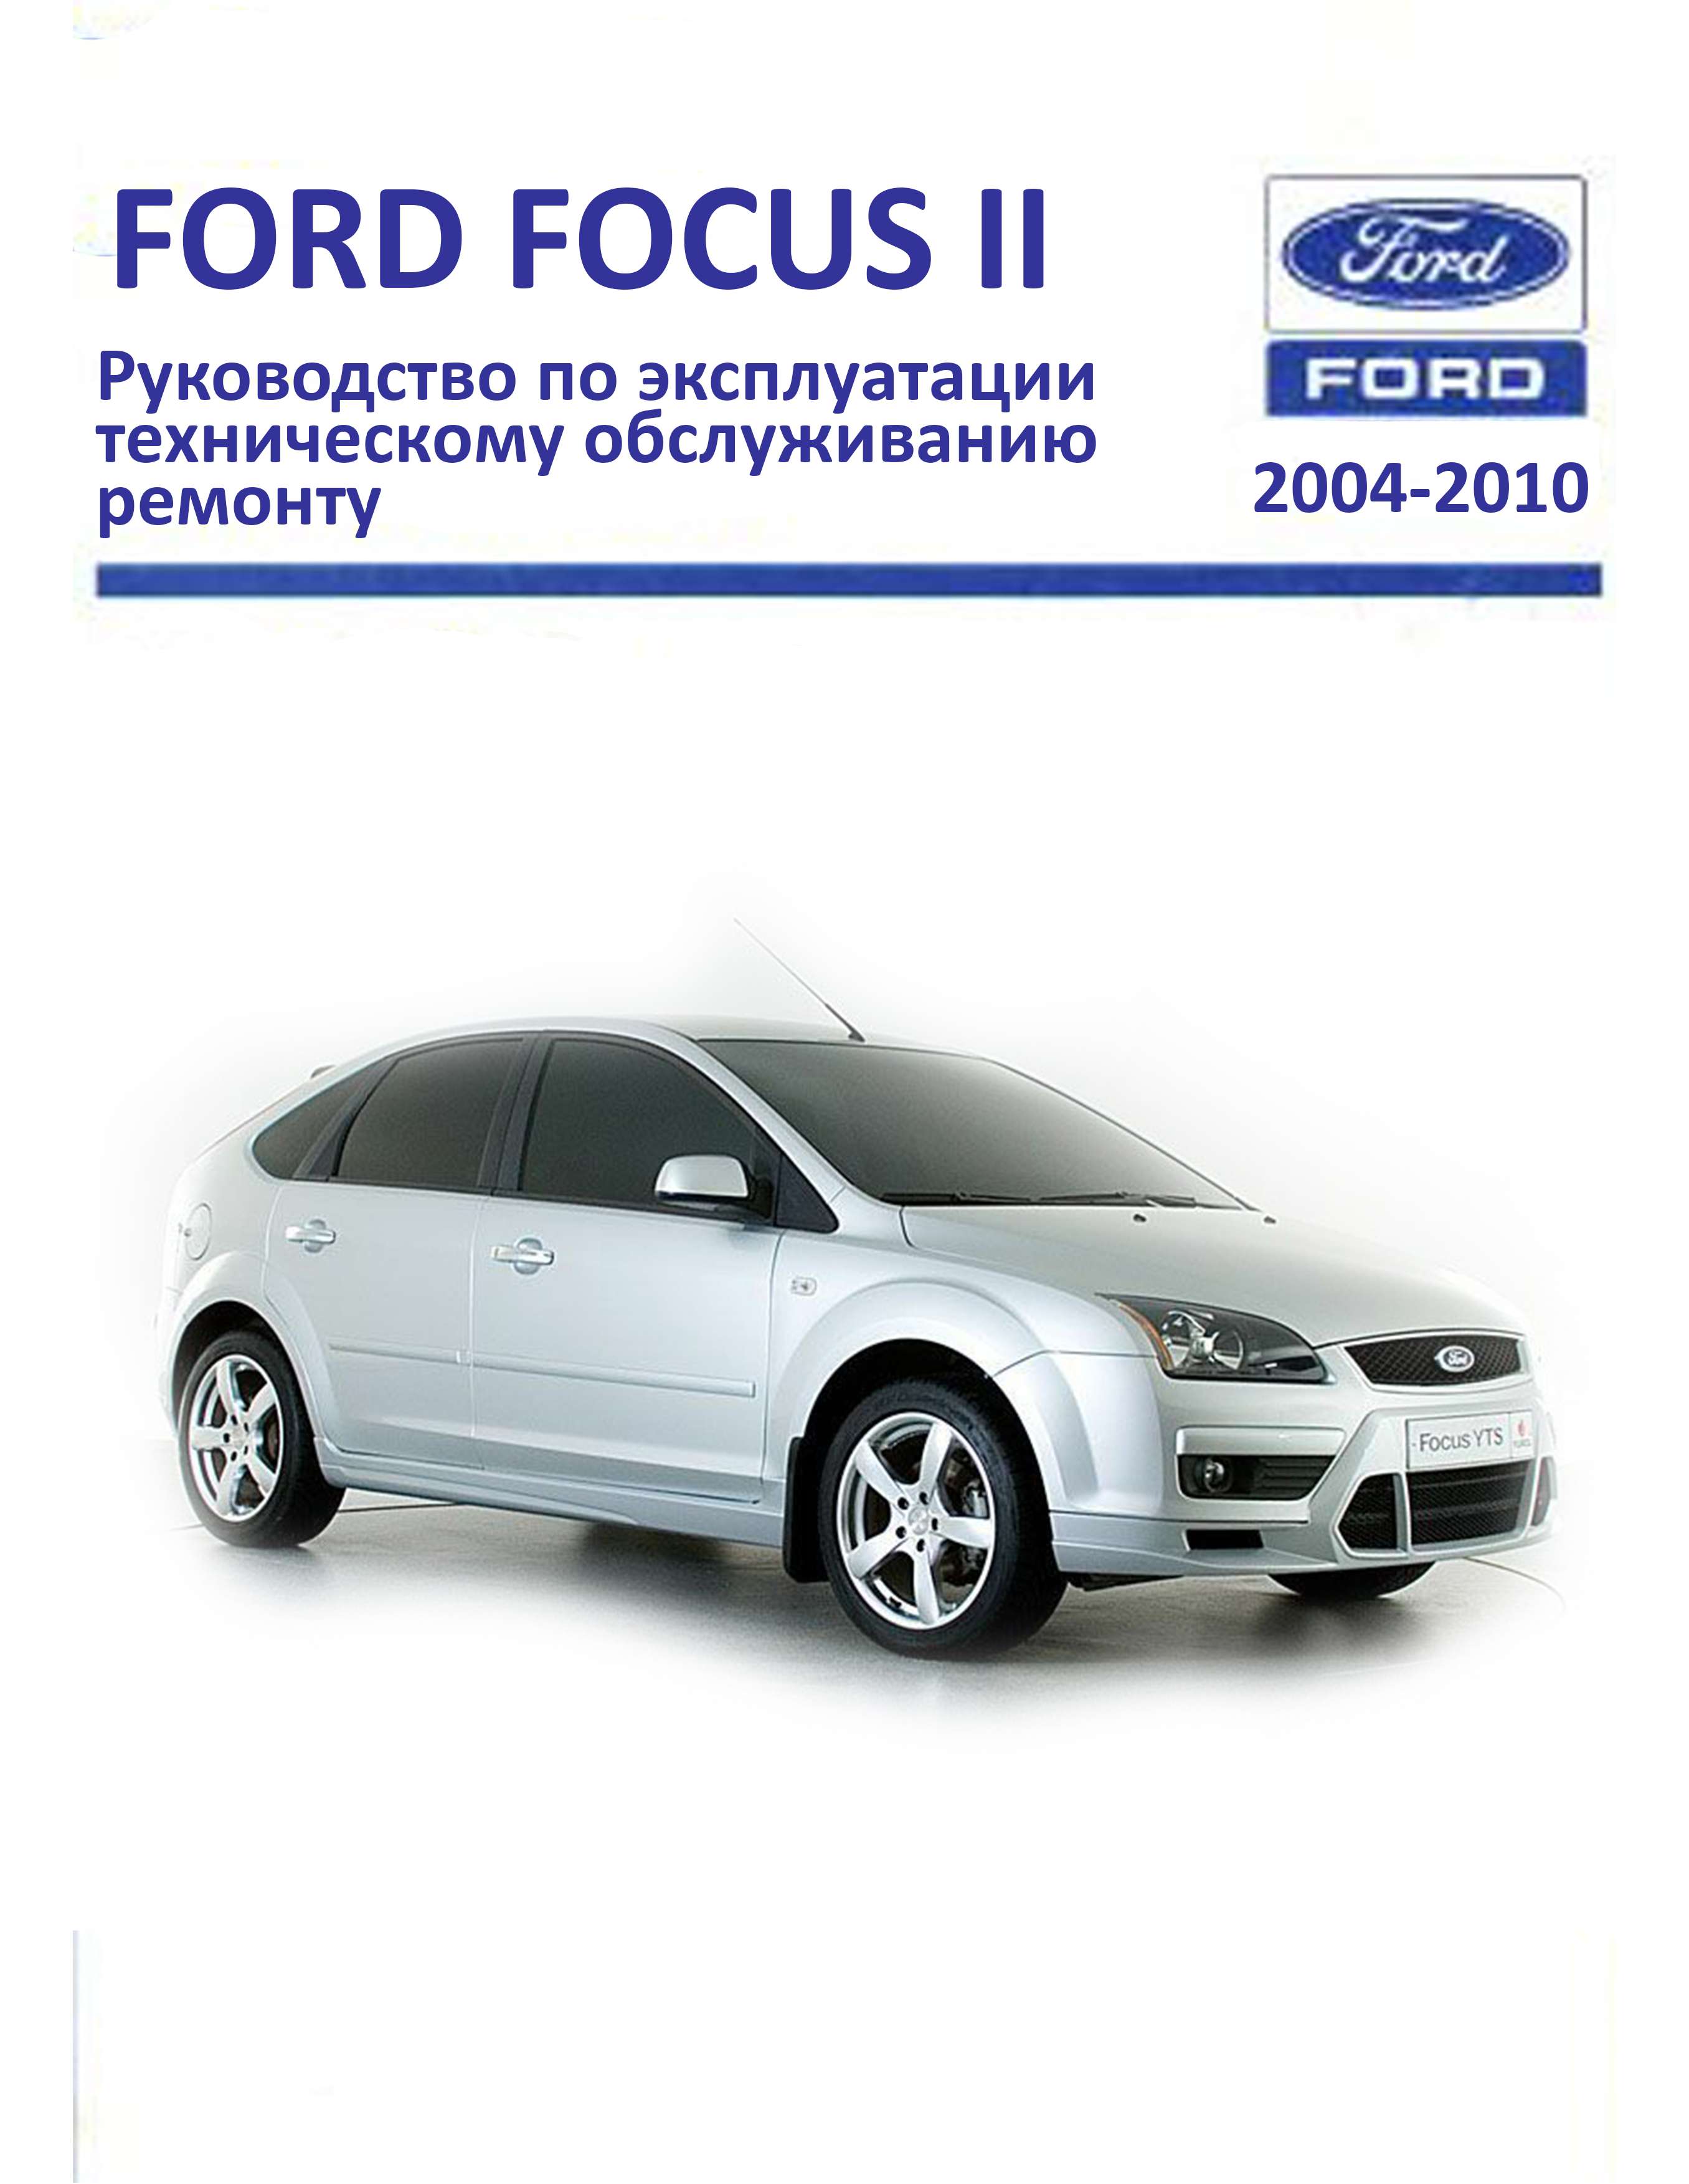 Ford Focus II 1.4/ 1.6 л устройство, обслуживание, эксплуатация и ремонт обложка